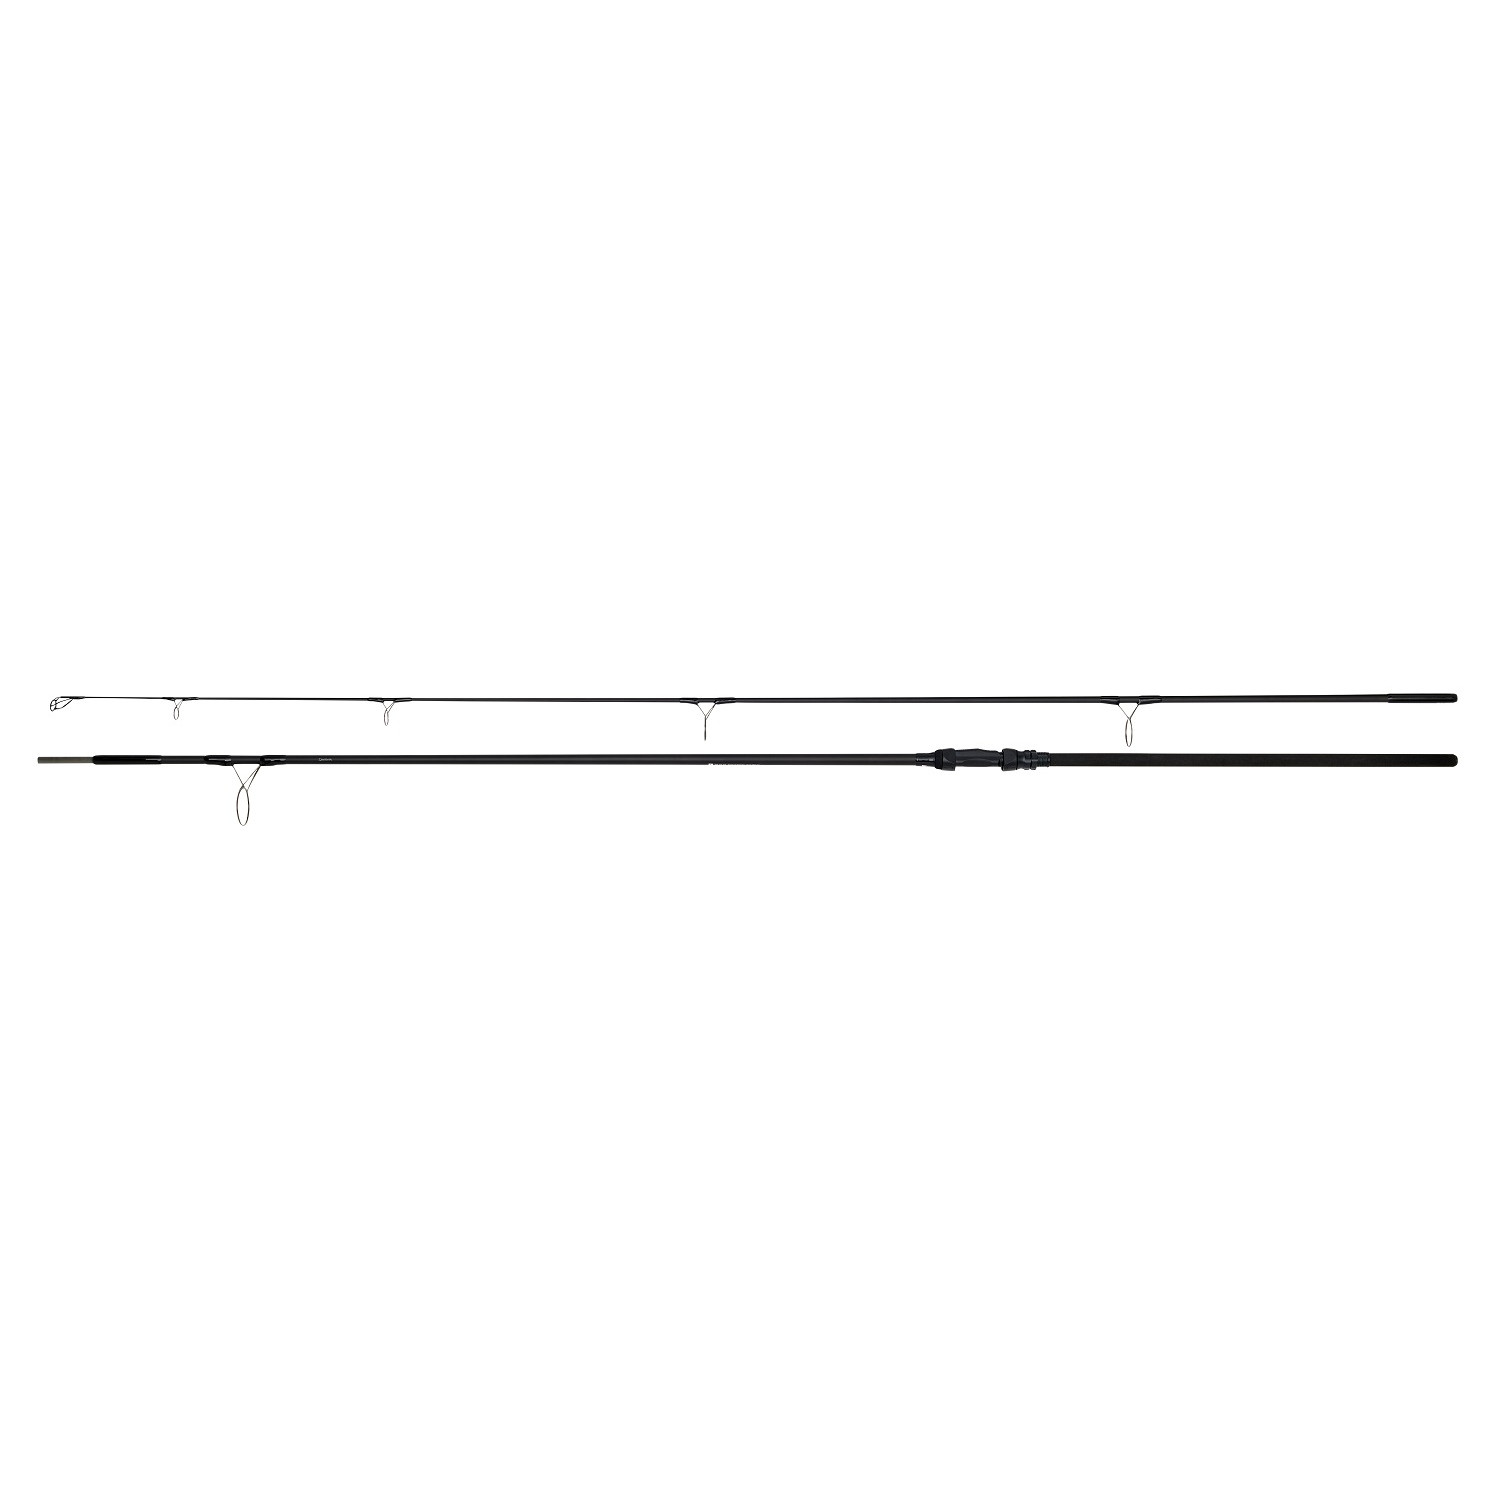 DAIWA Ultimate Carp Fishing Rod INFINITY X45 CARP 12ft/3.25lb